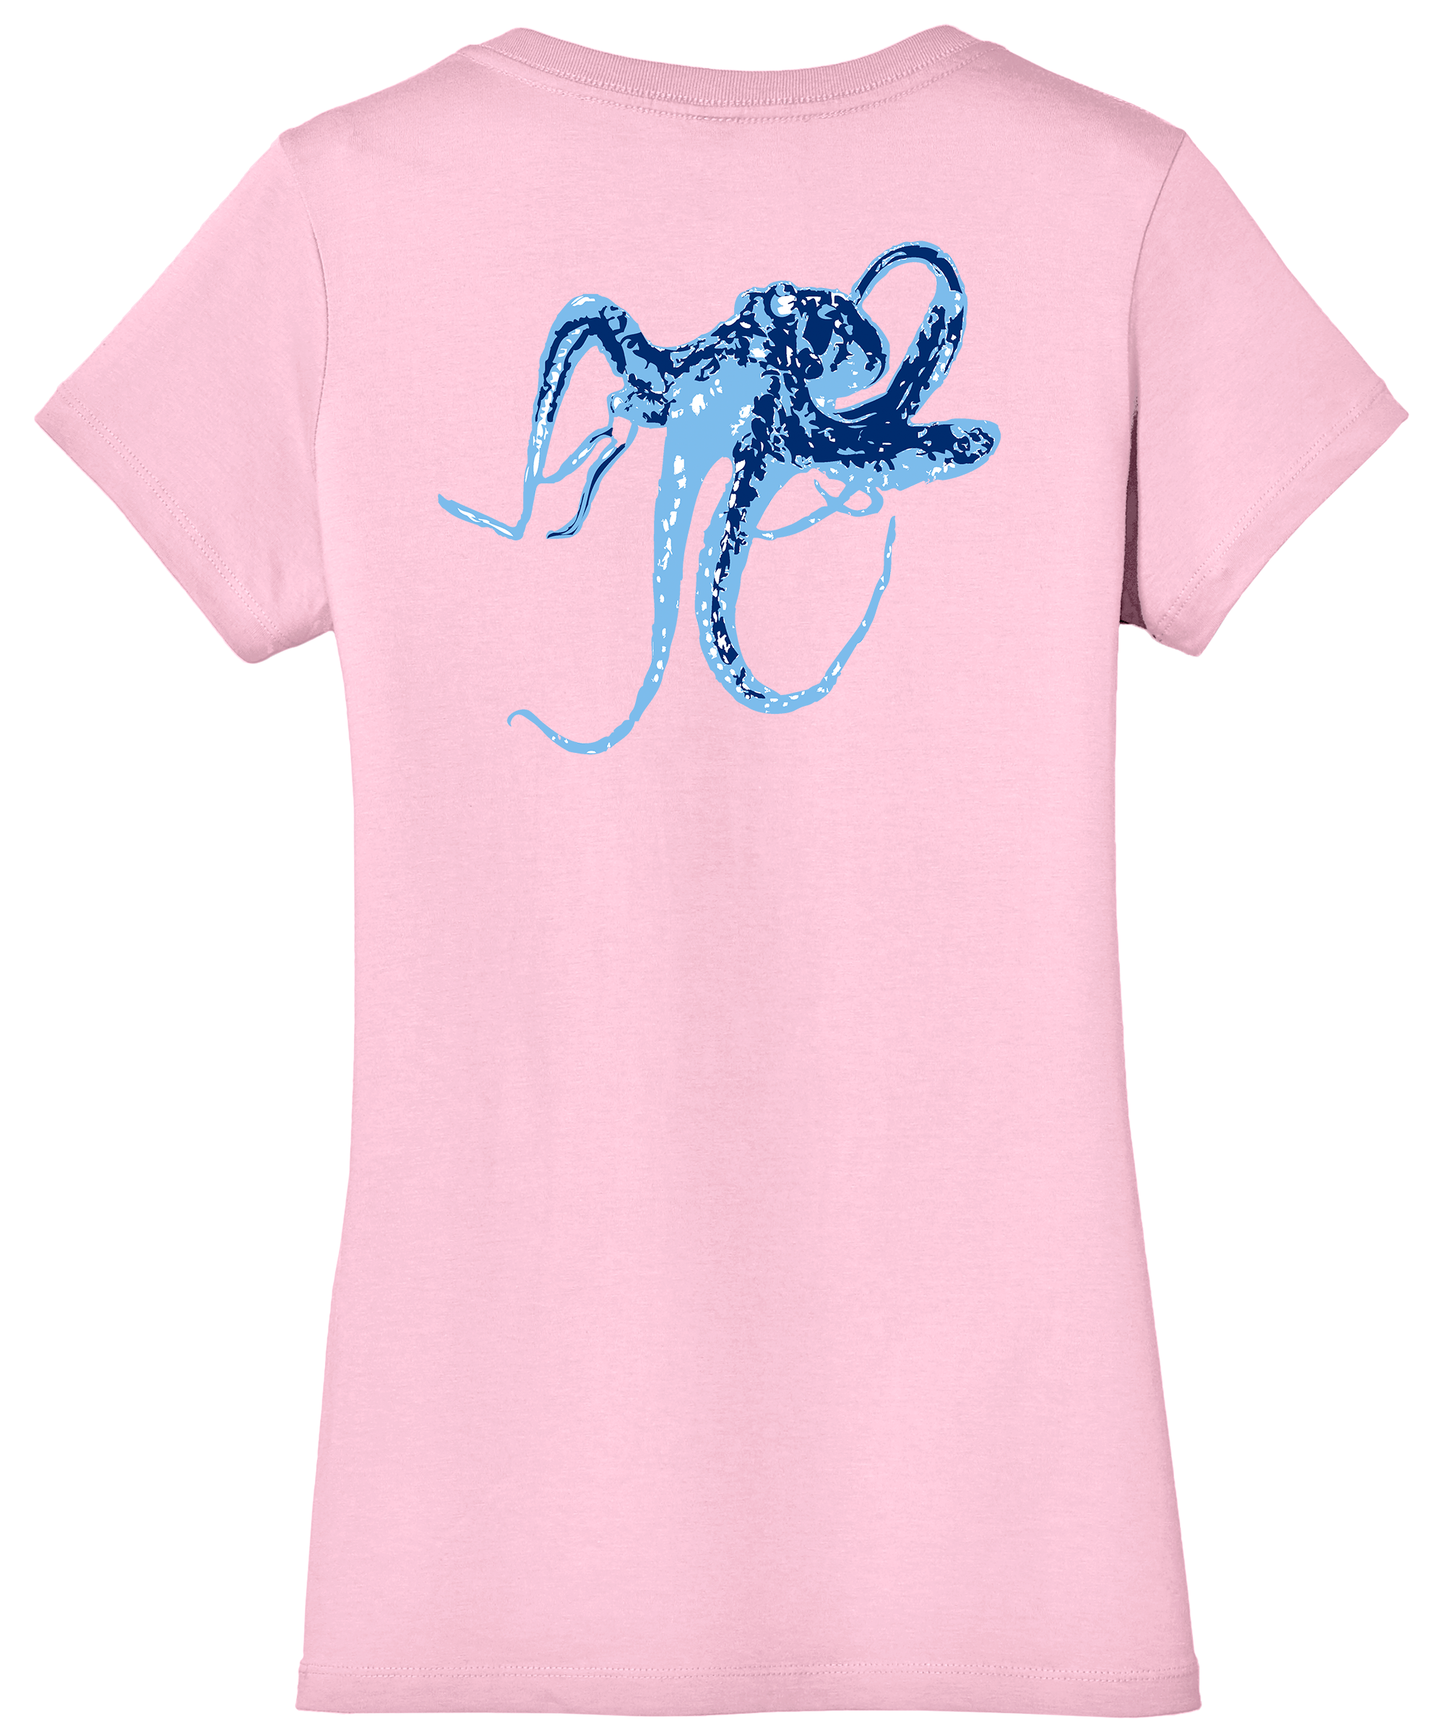 Lt. Pink Ladies Octopus V-neck Short Sleeve Cotton Tee - Reel Fishy Apparel Spearguns logo on front